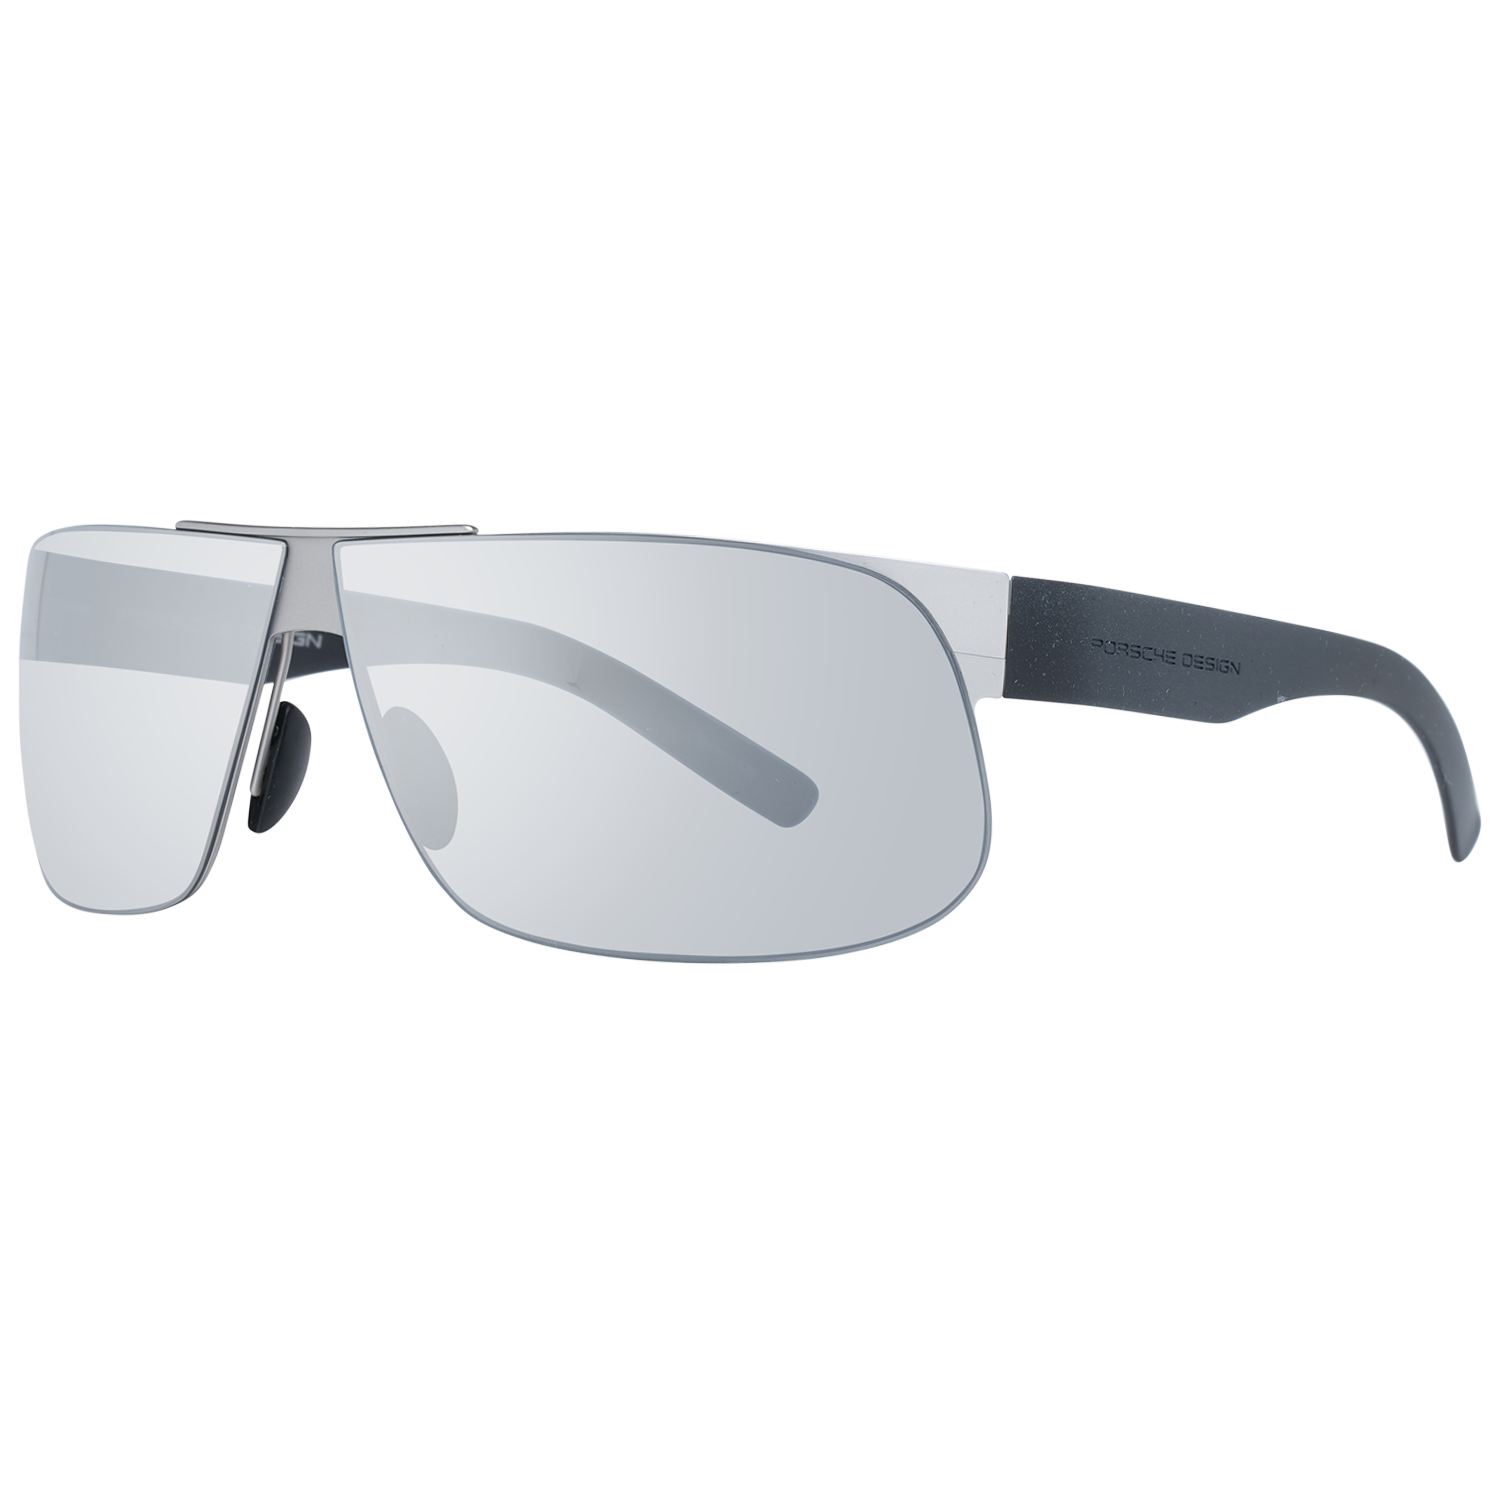 Porsche Design Sunglasses Porsche Design Sunglasses P8535 C 69 Titanium Eyeglasses Eyewear UK USA Australia 